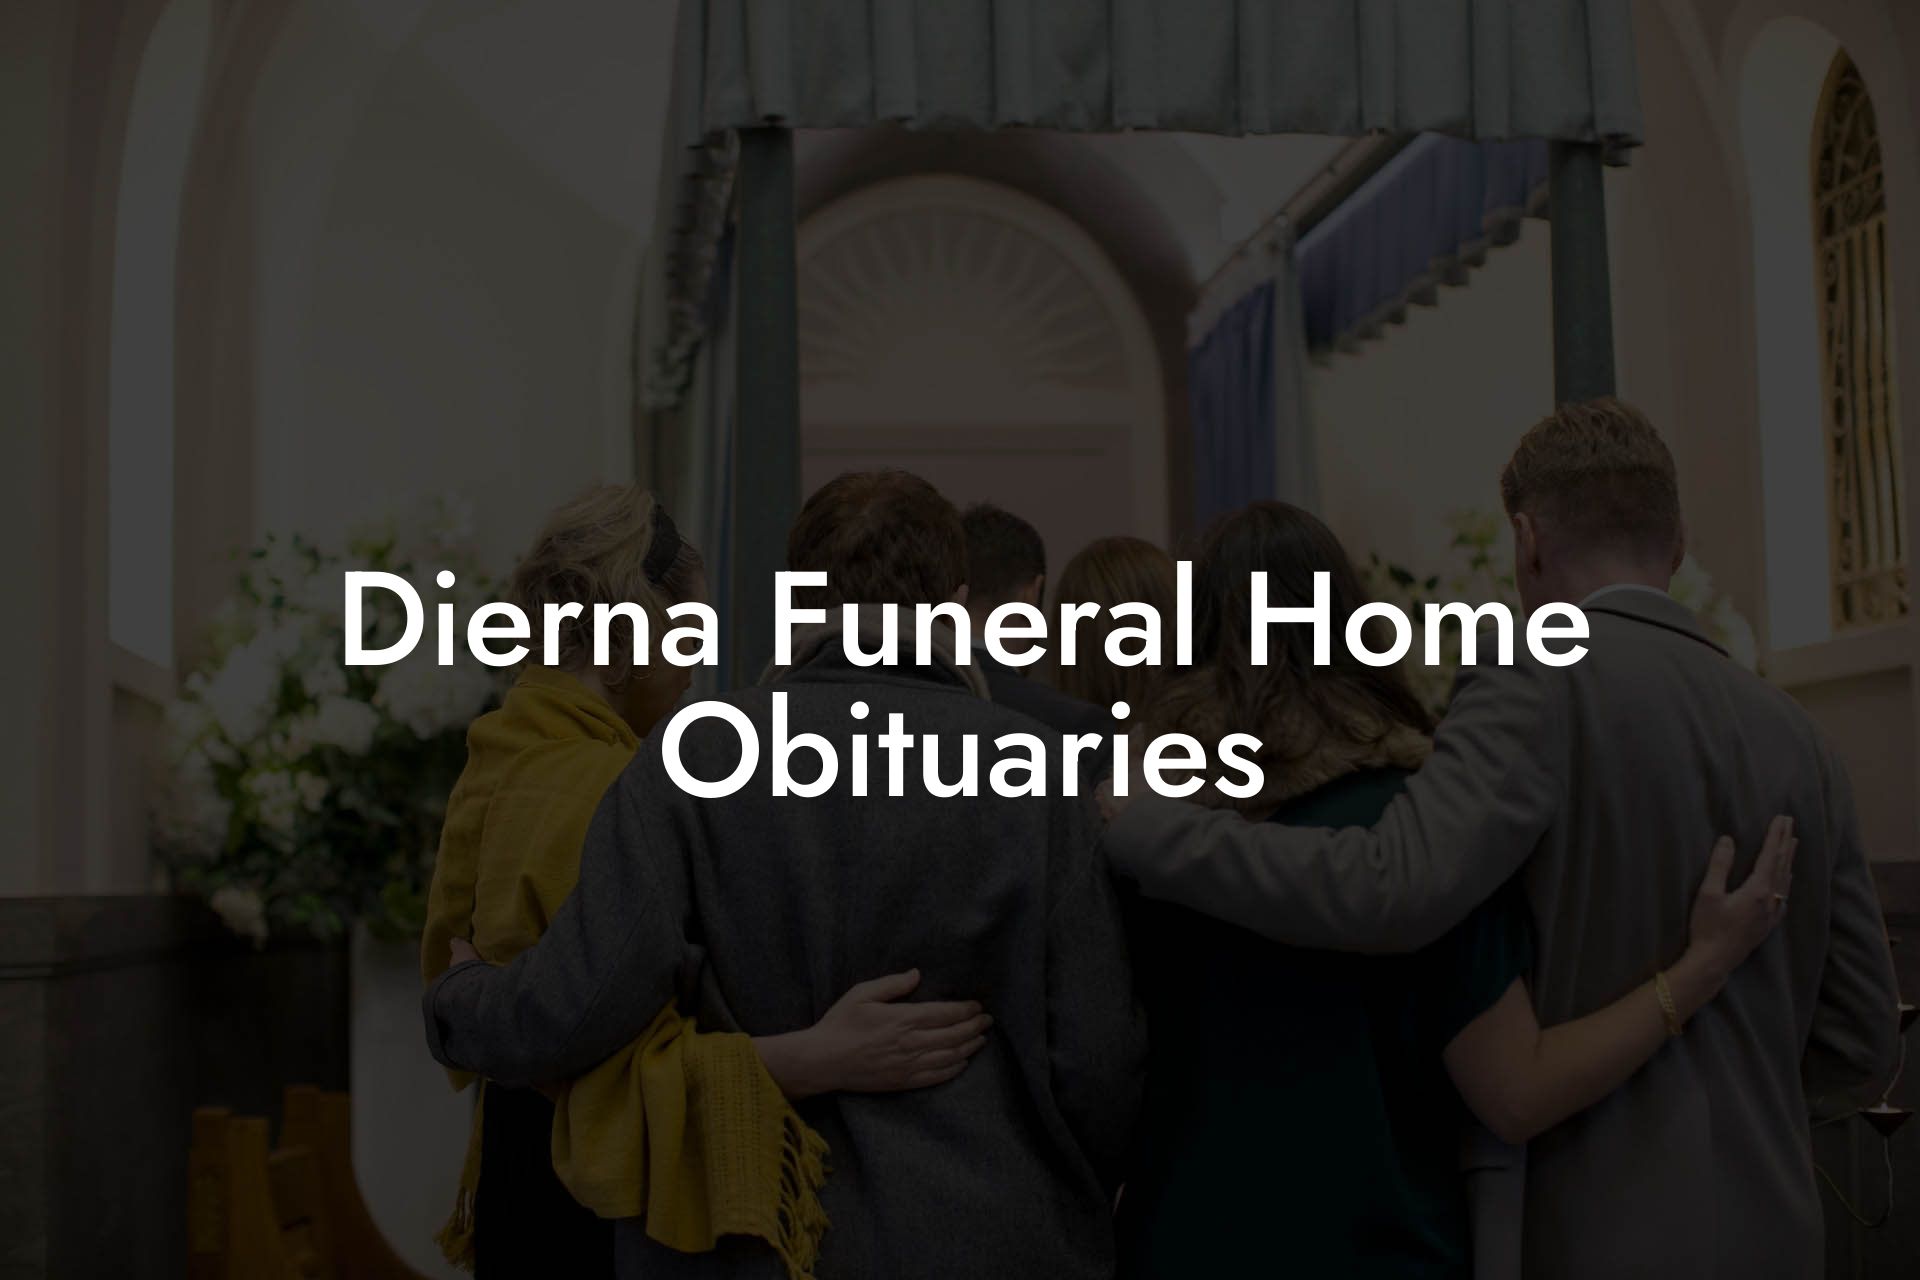 Dierna Funeral Home Obituaries